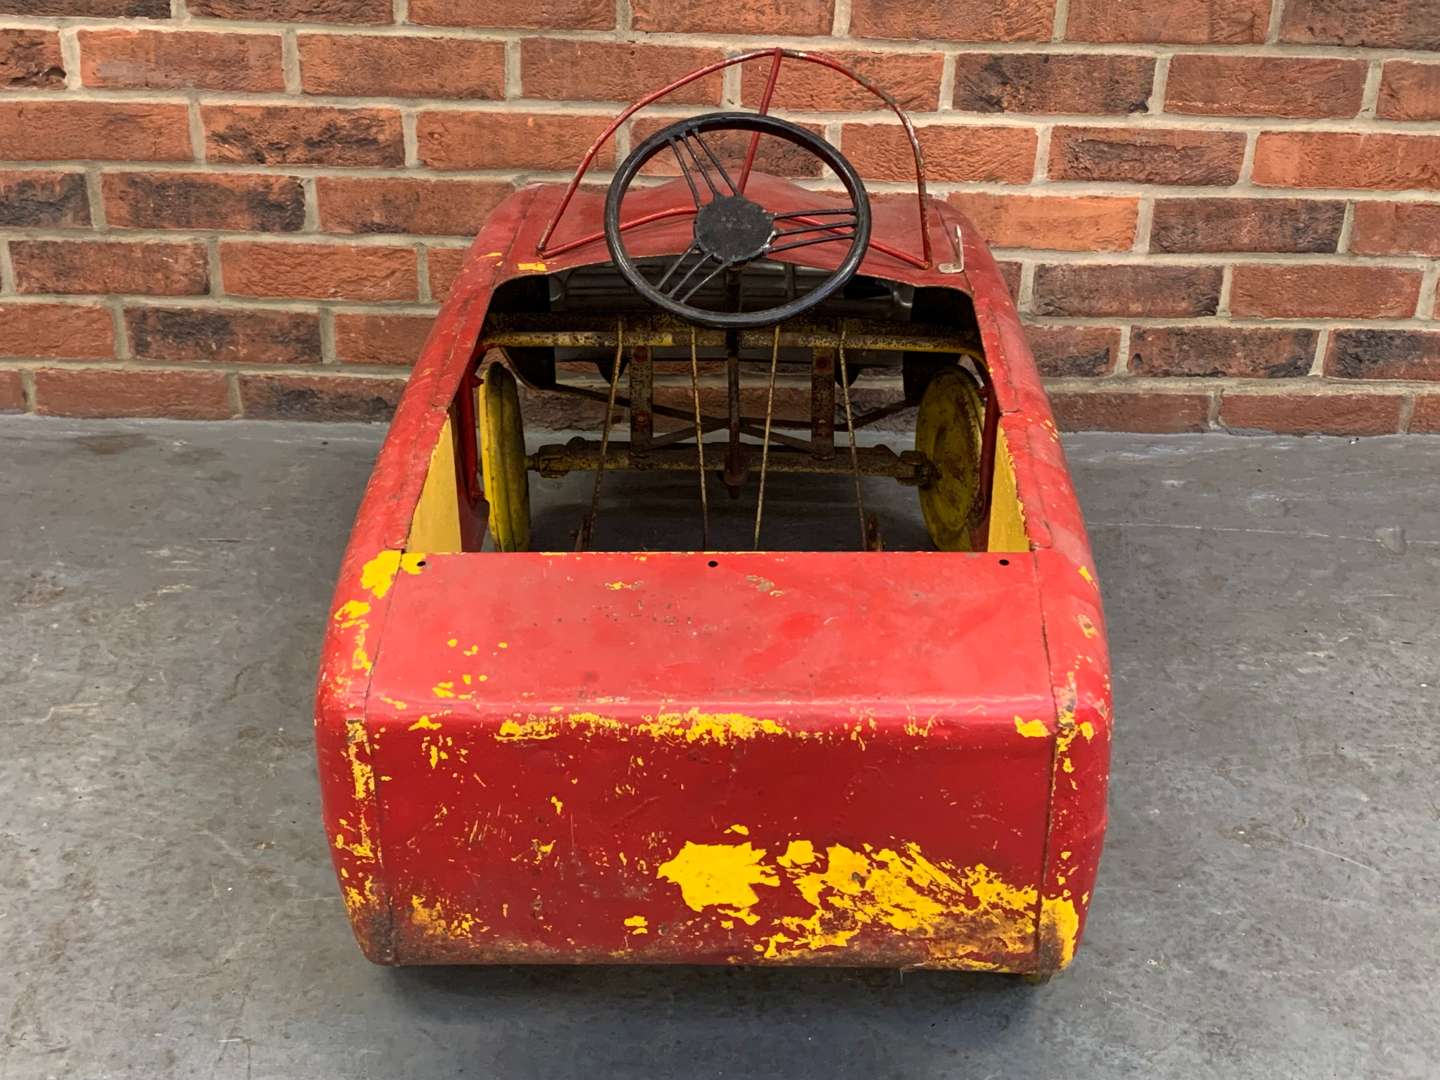 <p>Zephyr Tin Plate Child's Pedal Car</p>